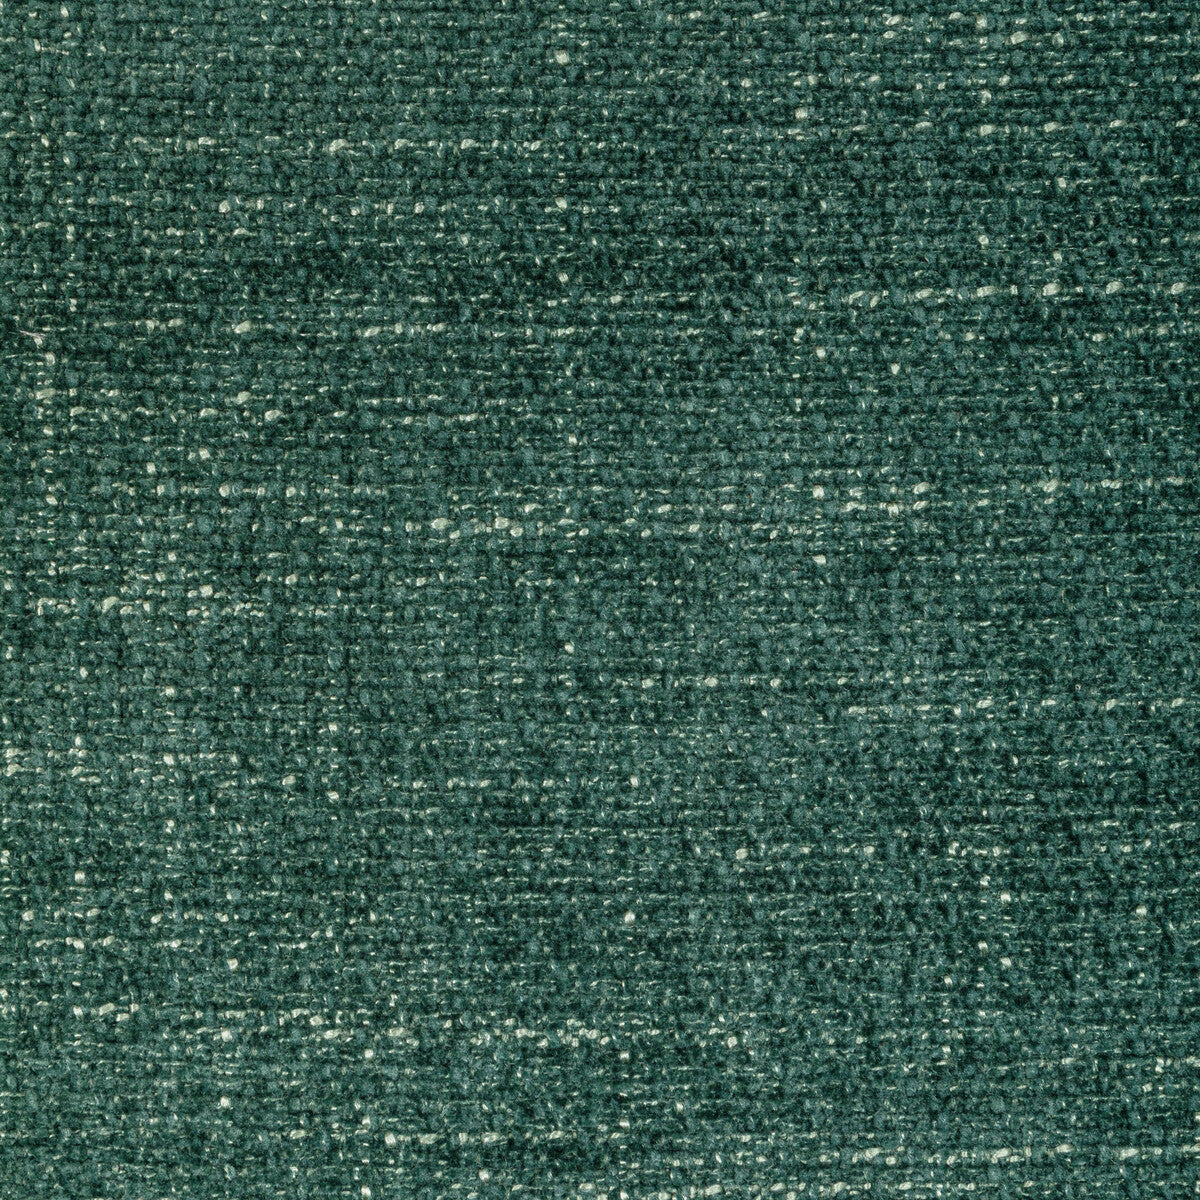 Kravet Smart fabric in 36578-53 color - pattern 36578.53.0 - by Kravet Smart in the Performance Kravetarmor collection